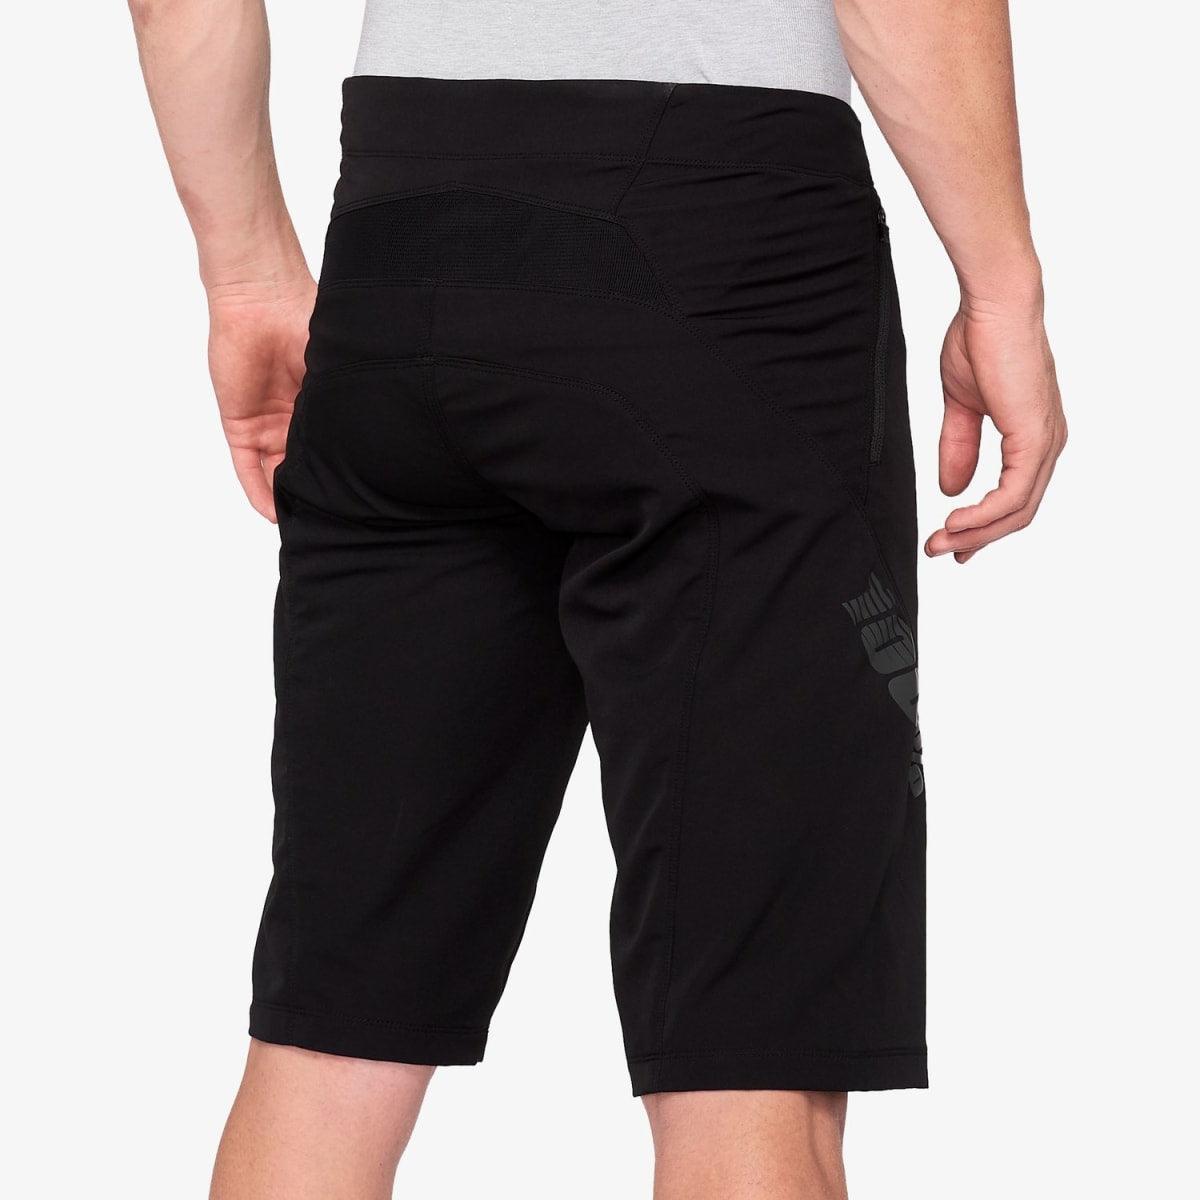 100% Airmatic Blk Shorts - Tienda Ride